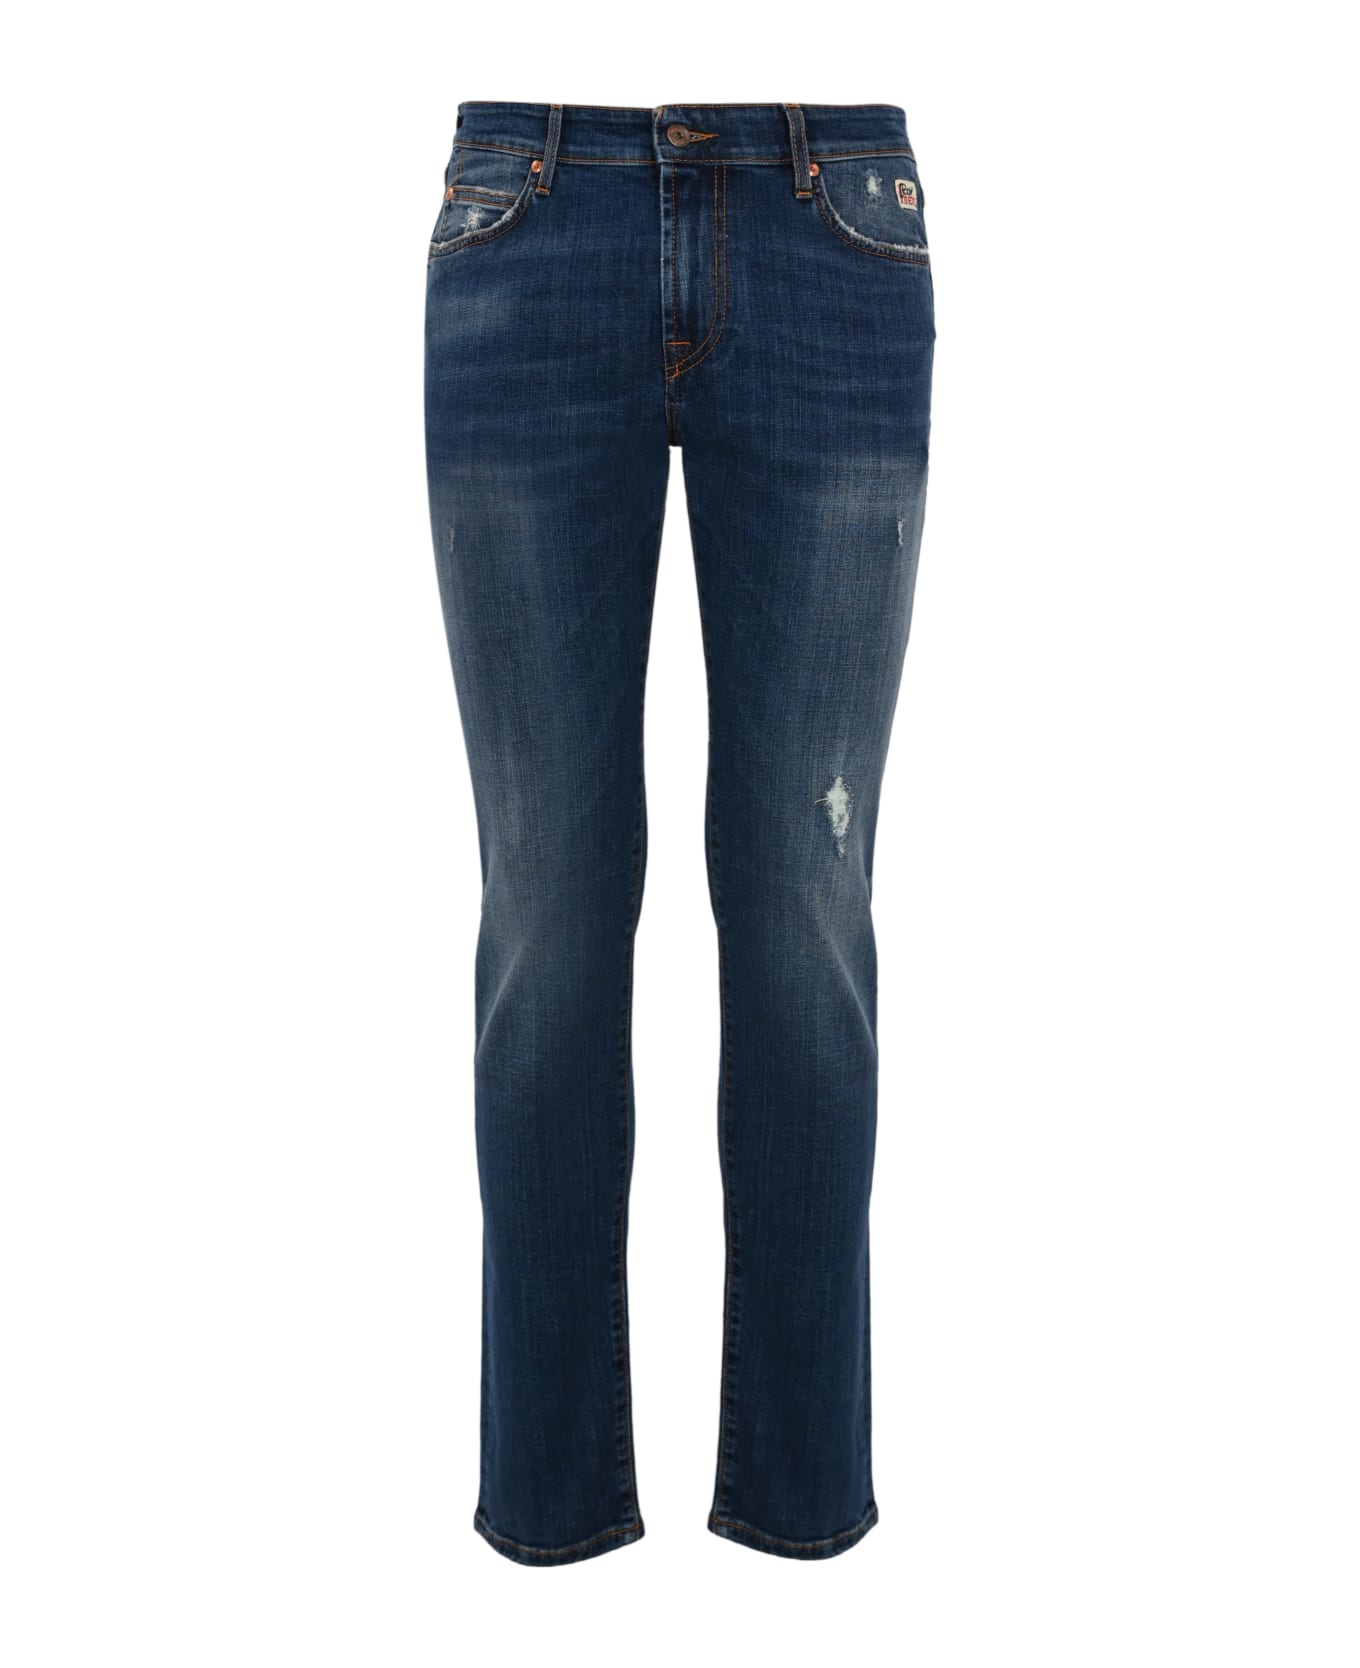 Roy Rogers 517 Jeans In Dark Denim - Denim